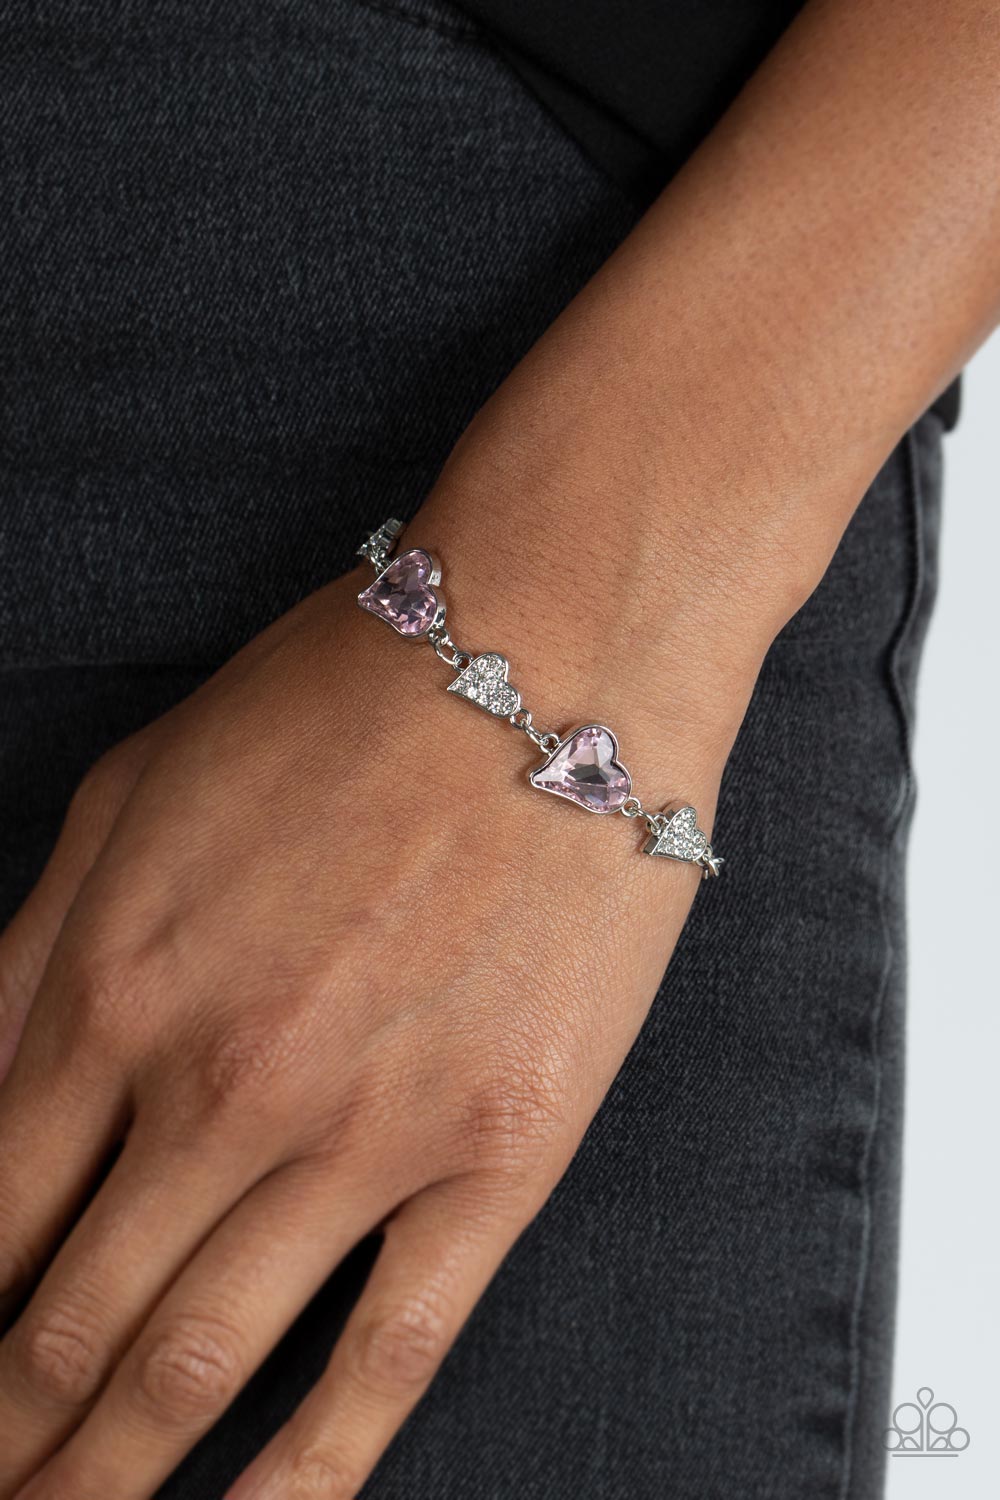 Cluelessly Crushing Pink Rhinestone Heart Bracelet - Paparazzi Accessories- lightbox - CarasShop.com - $5 Jewelry by Cara Jewels